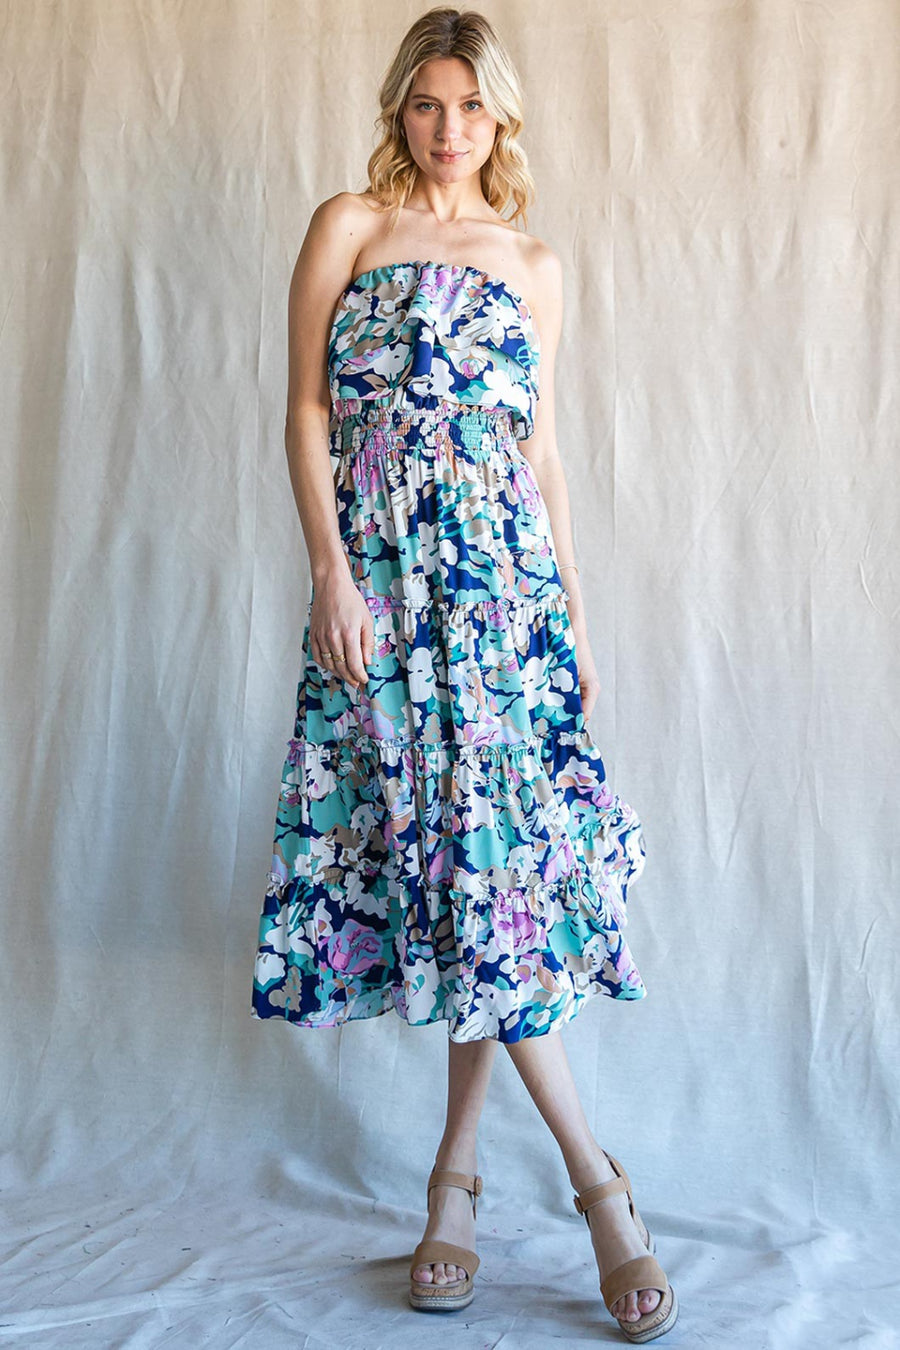 Cotton Bleu by Nu Label Ruffled Floral Midi Dress (S-XL)